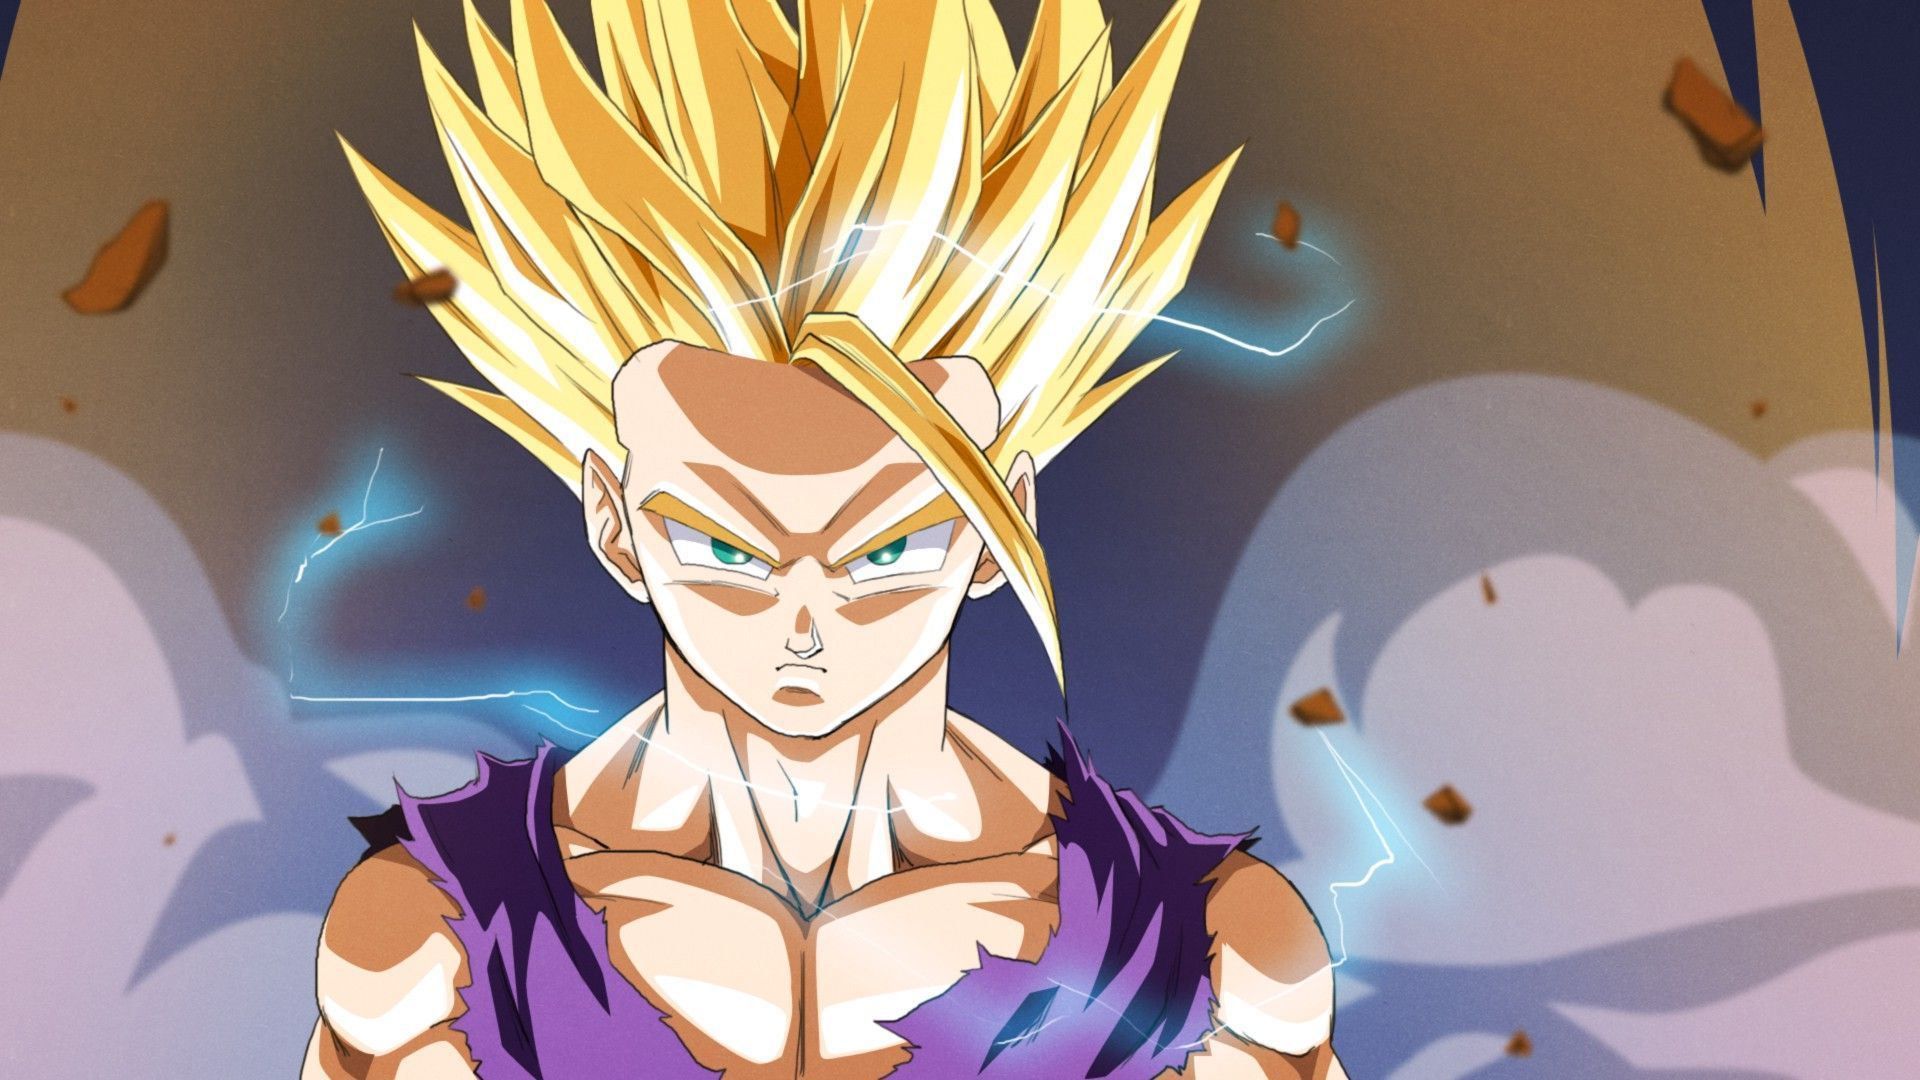 Dragon Ball Super Will Premiere on July 5th. Goku wallpaper, Anime HD wallpaper, Dragon ball super wallpaper